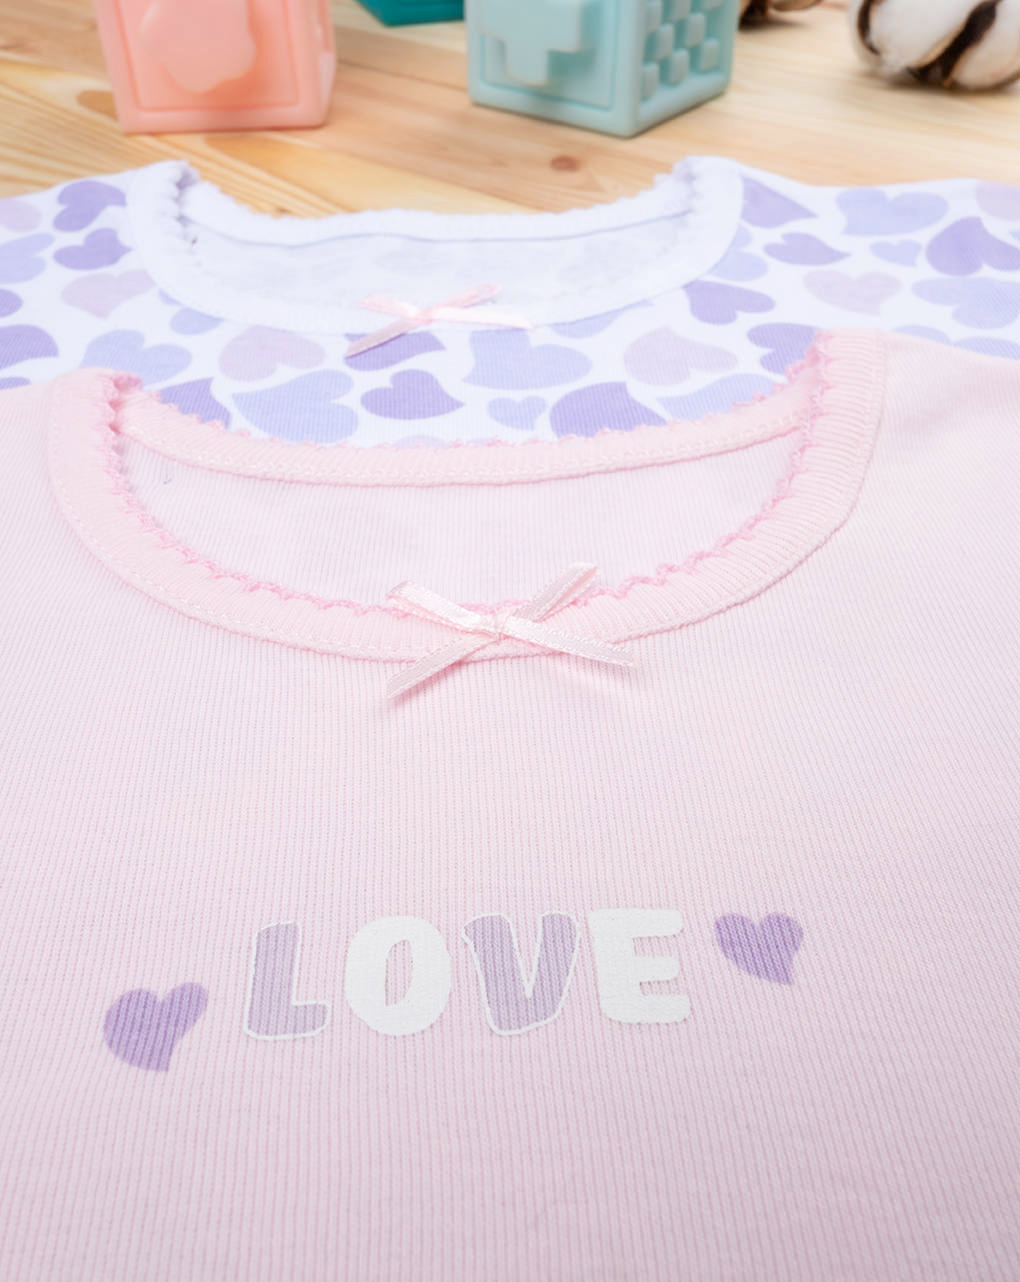 Pack 2 camisetas niña "corazones" algodón orgánico - Prénatal